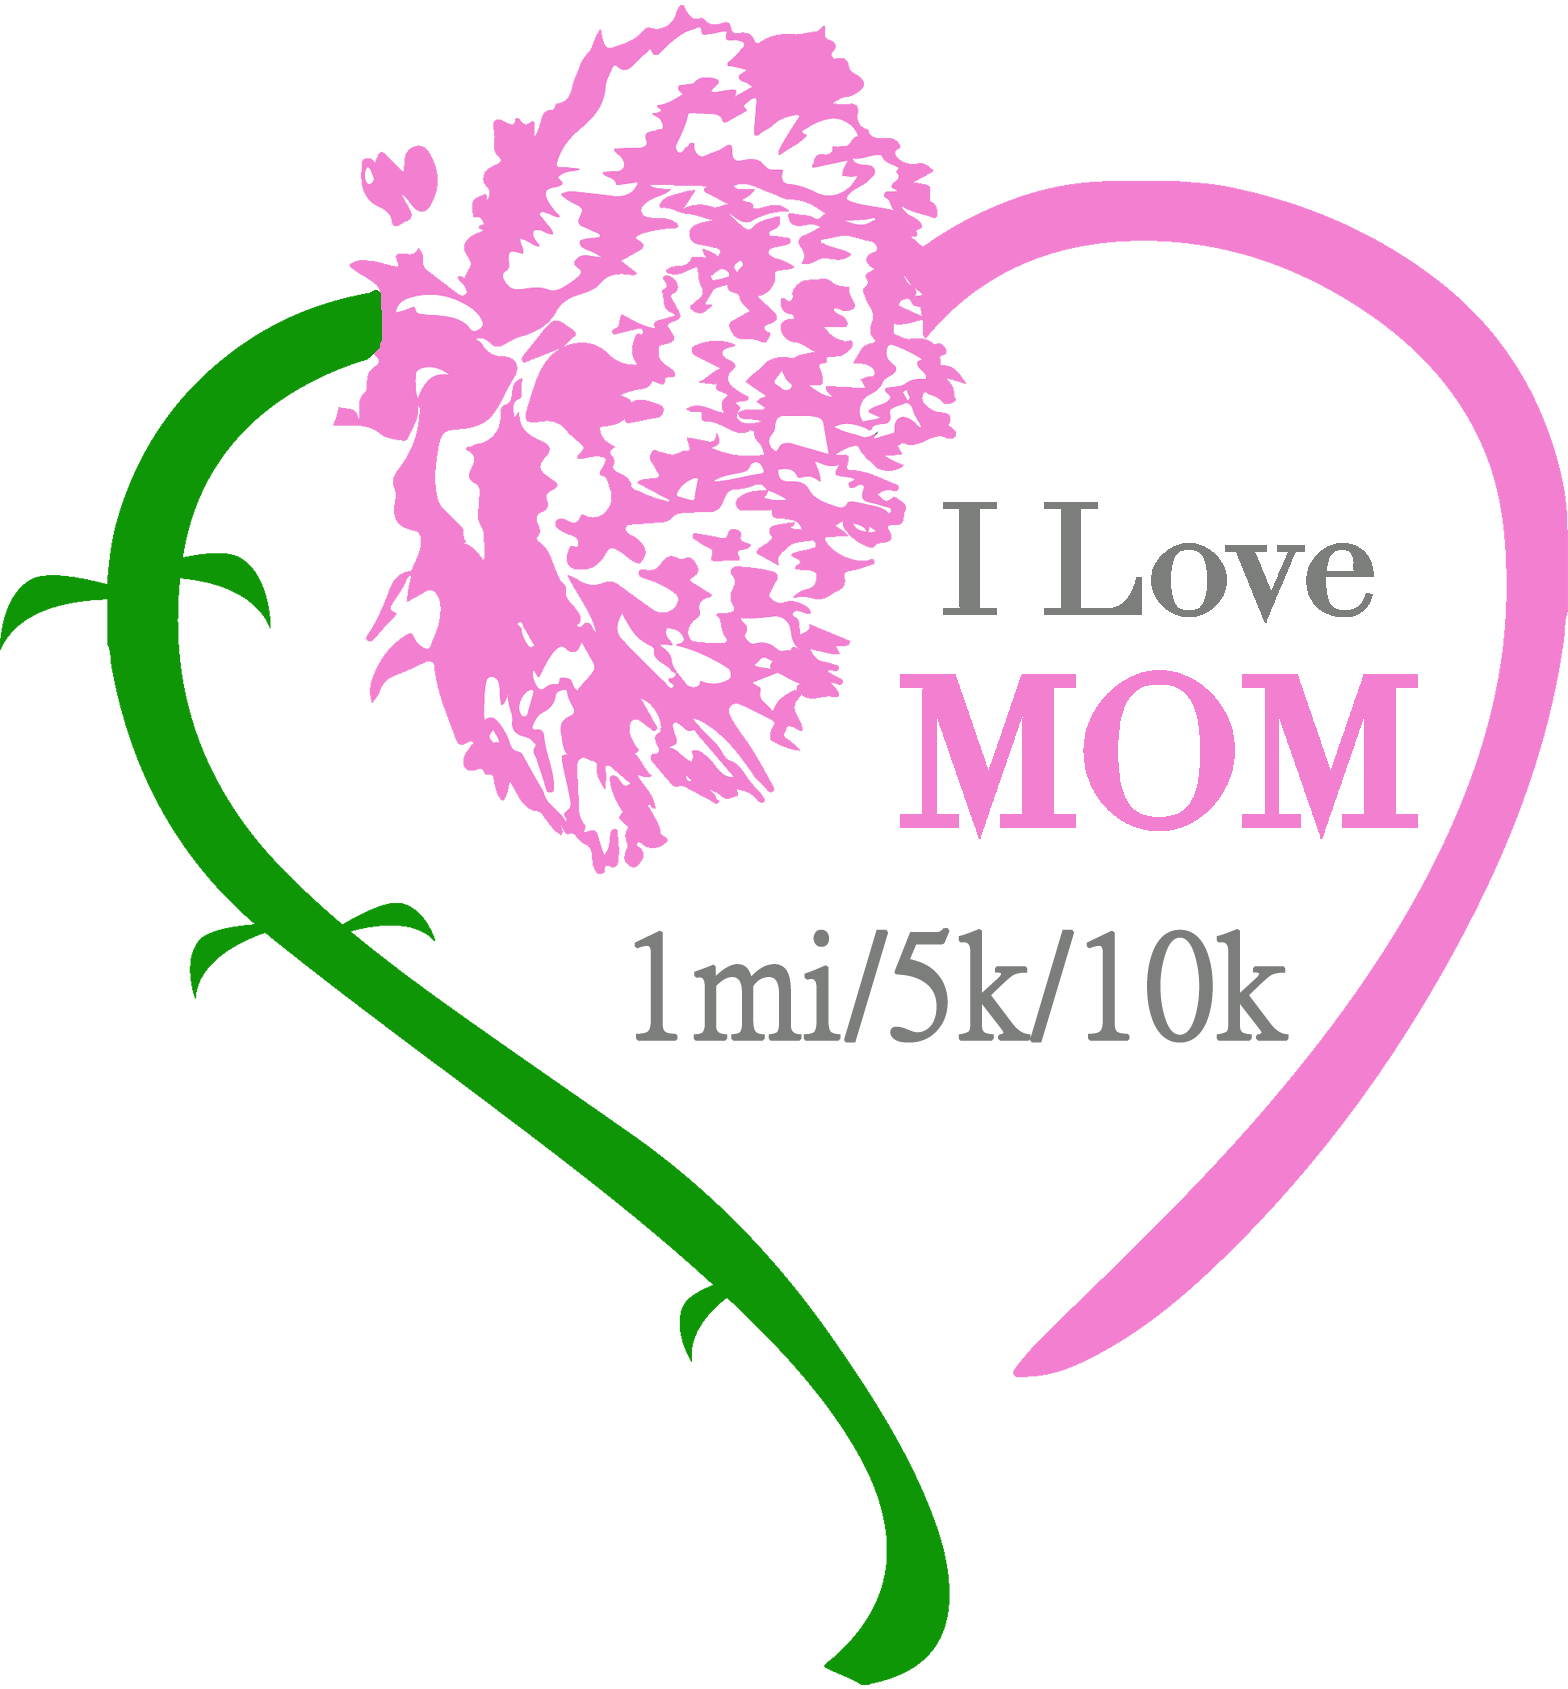 Ohio Mother's Day 1mi, 5k, 10k and FREE Kids Run: I Love MOM!